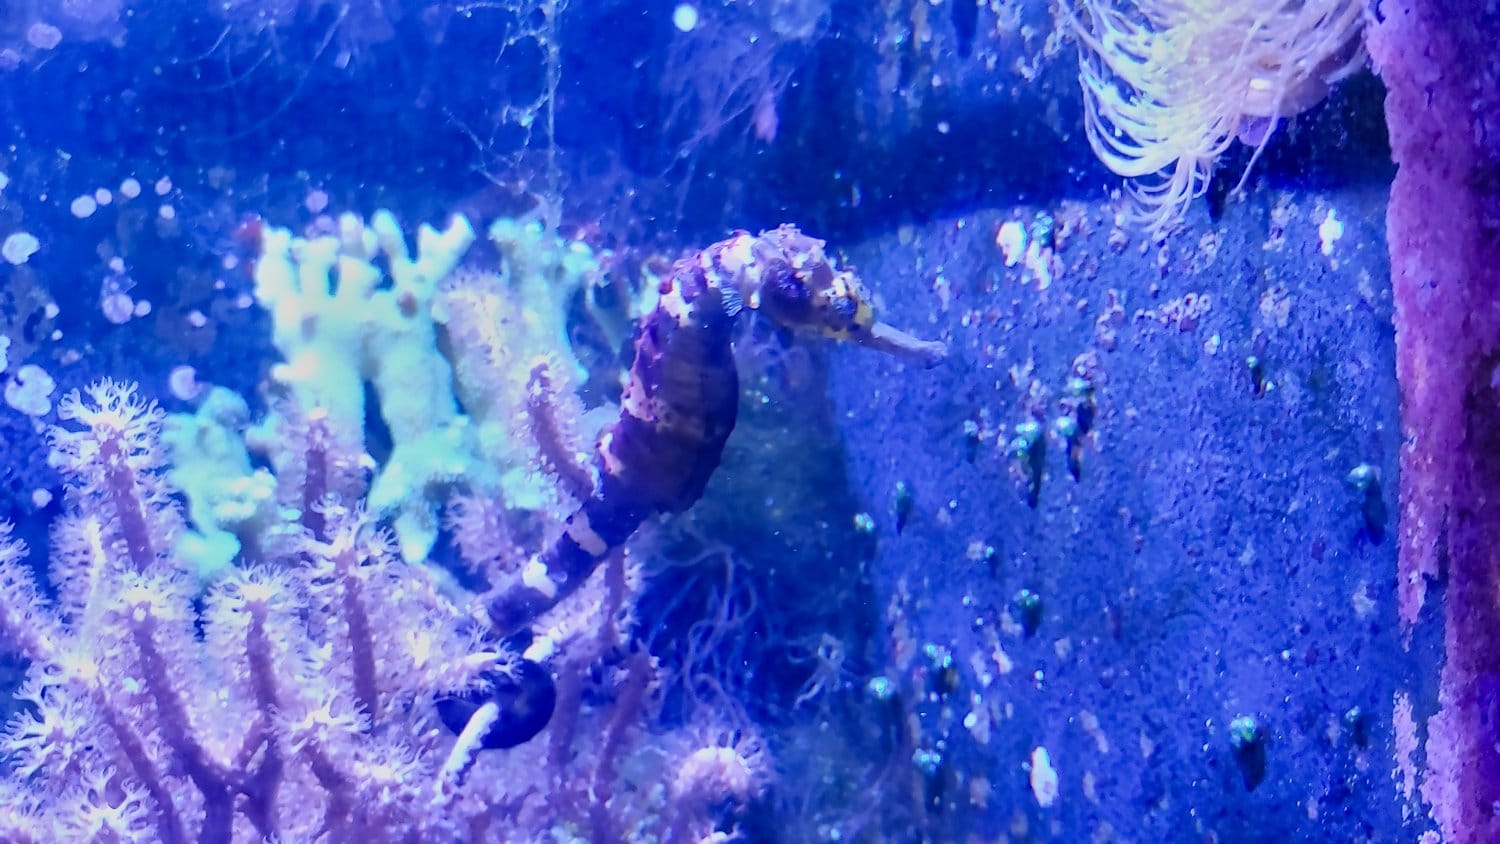 Seahorse at Shedd Aquarium.